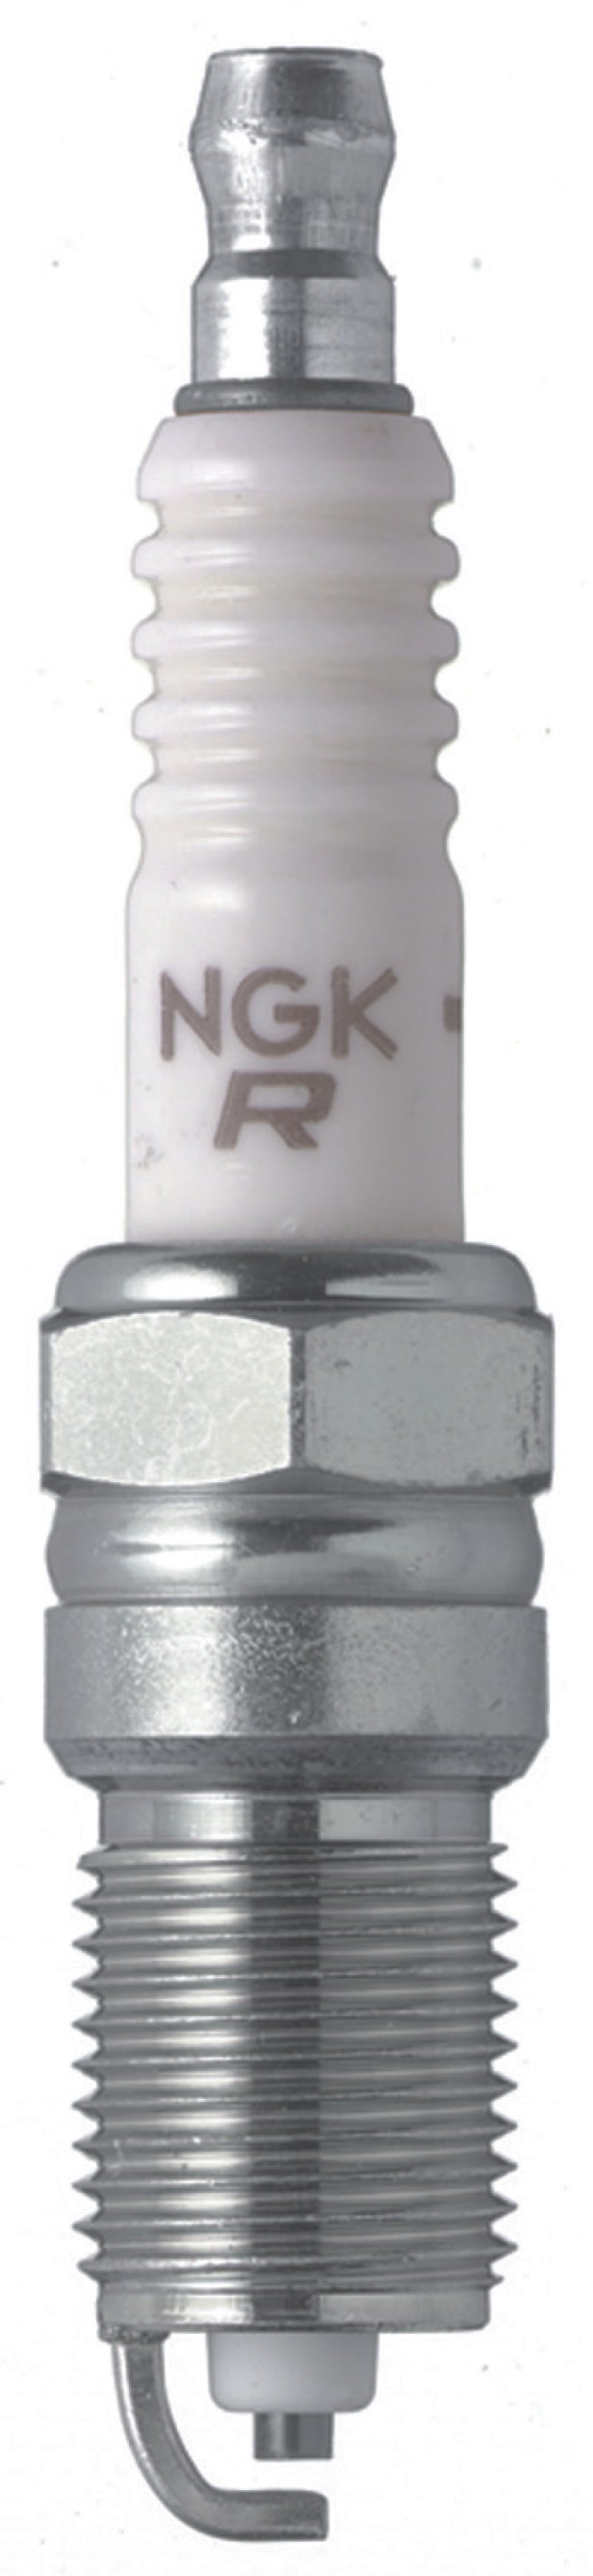 NGK V-Power Spark Plug Box of 4 (TR6).